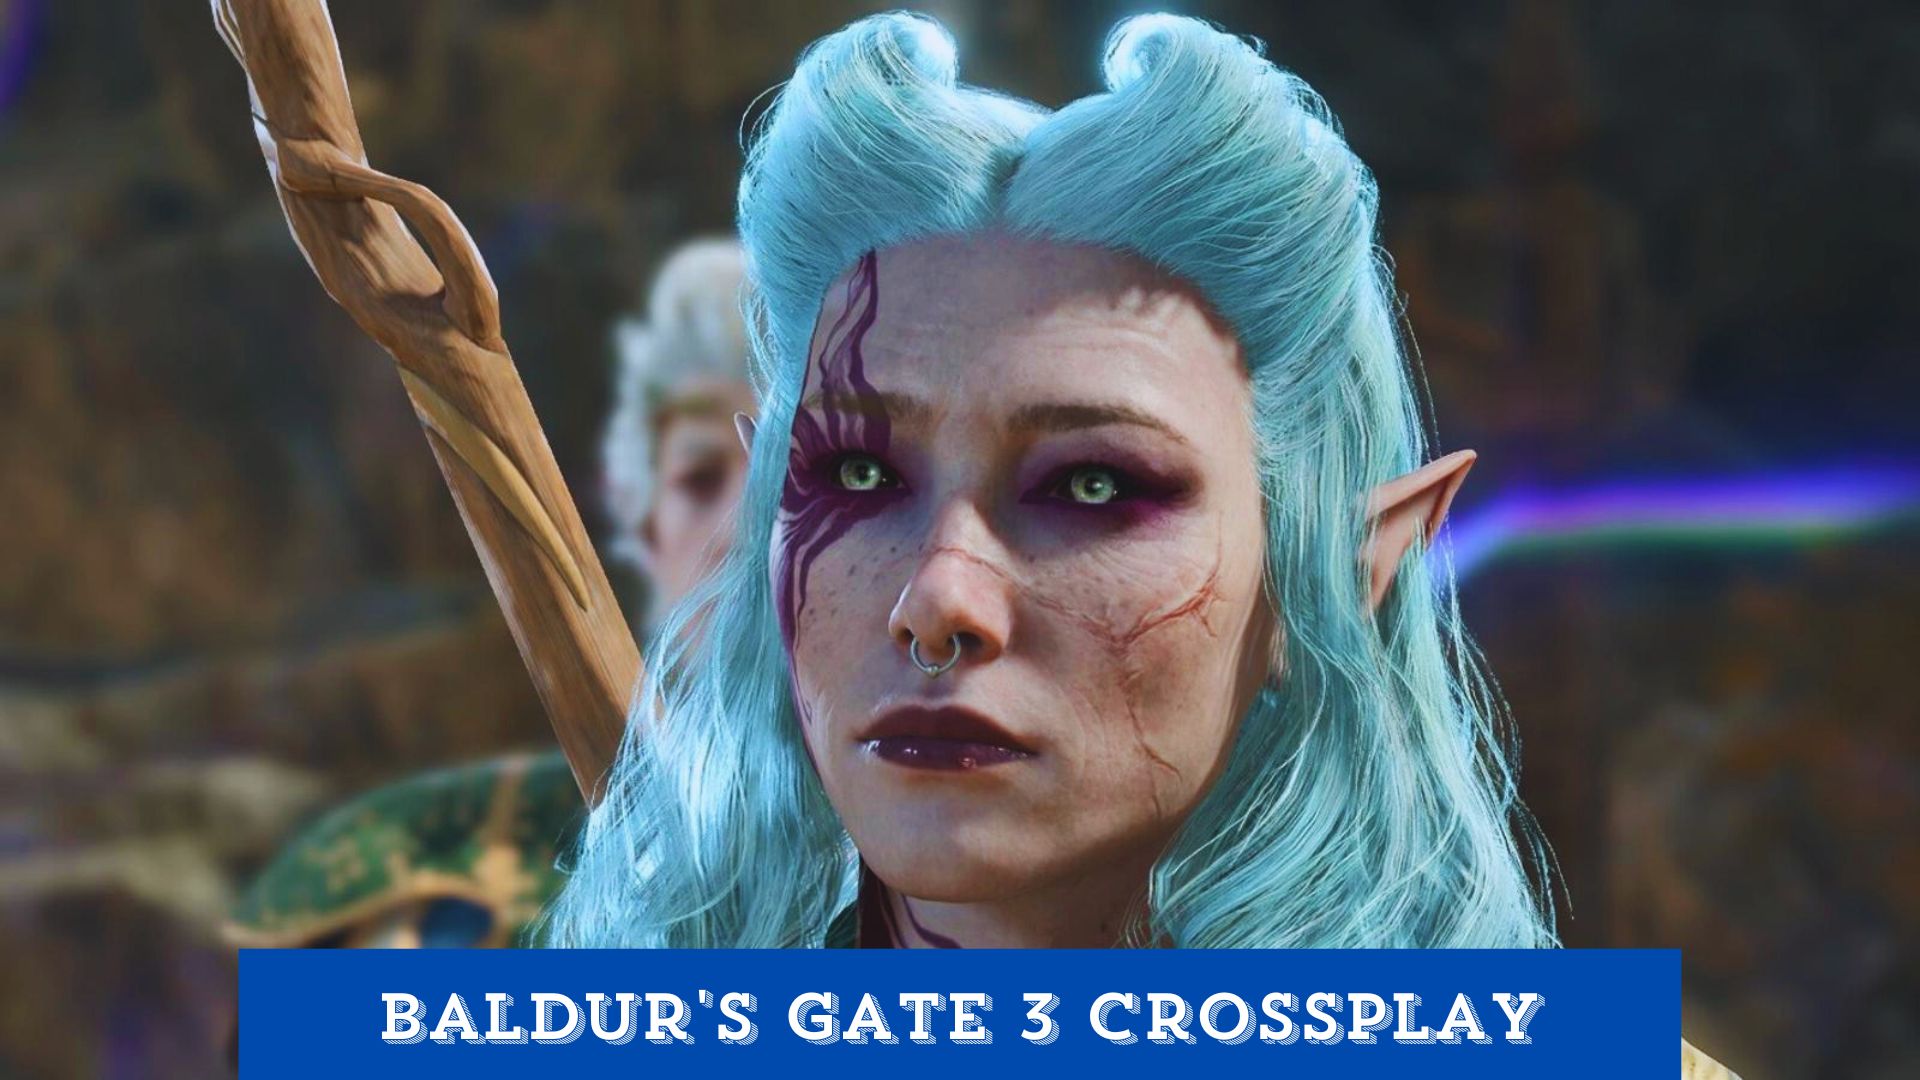 Baldur's Gate 3 Crossplay